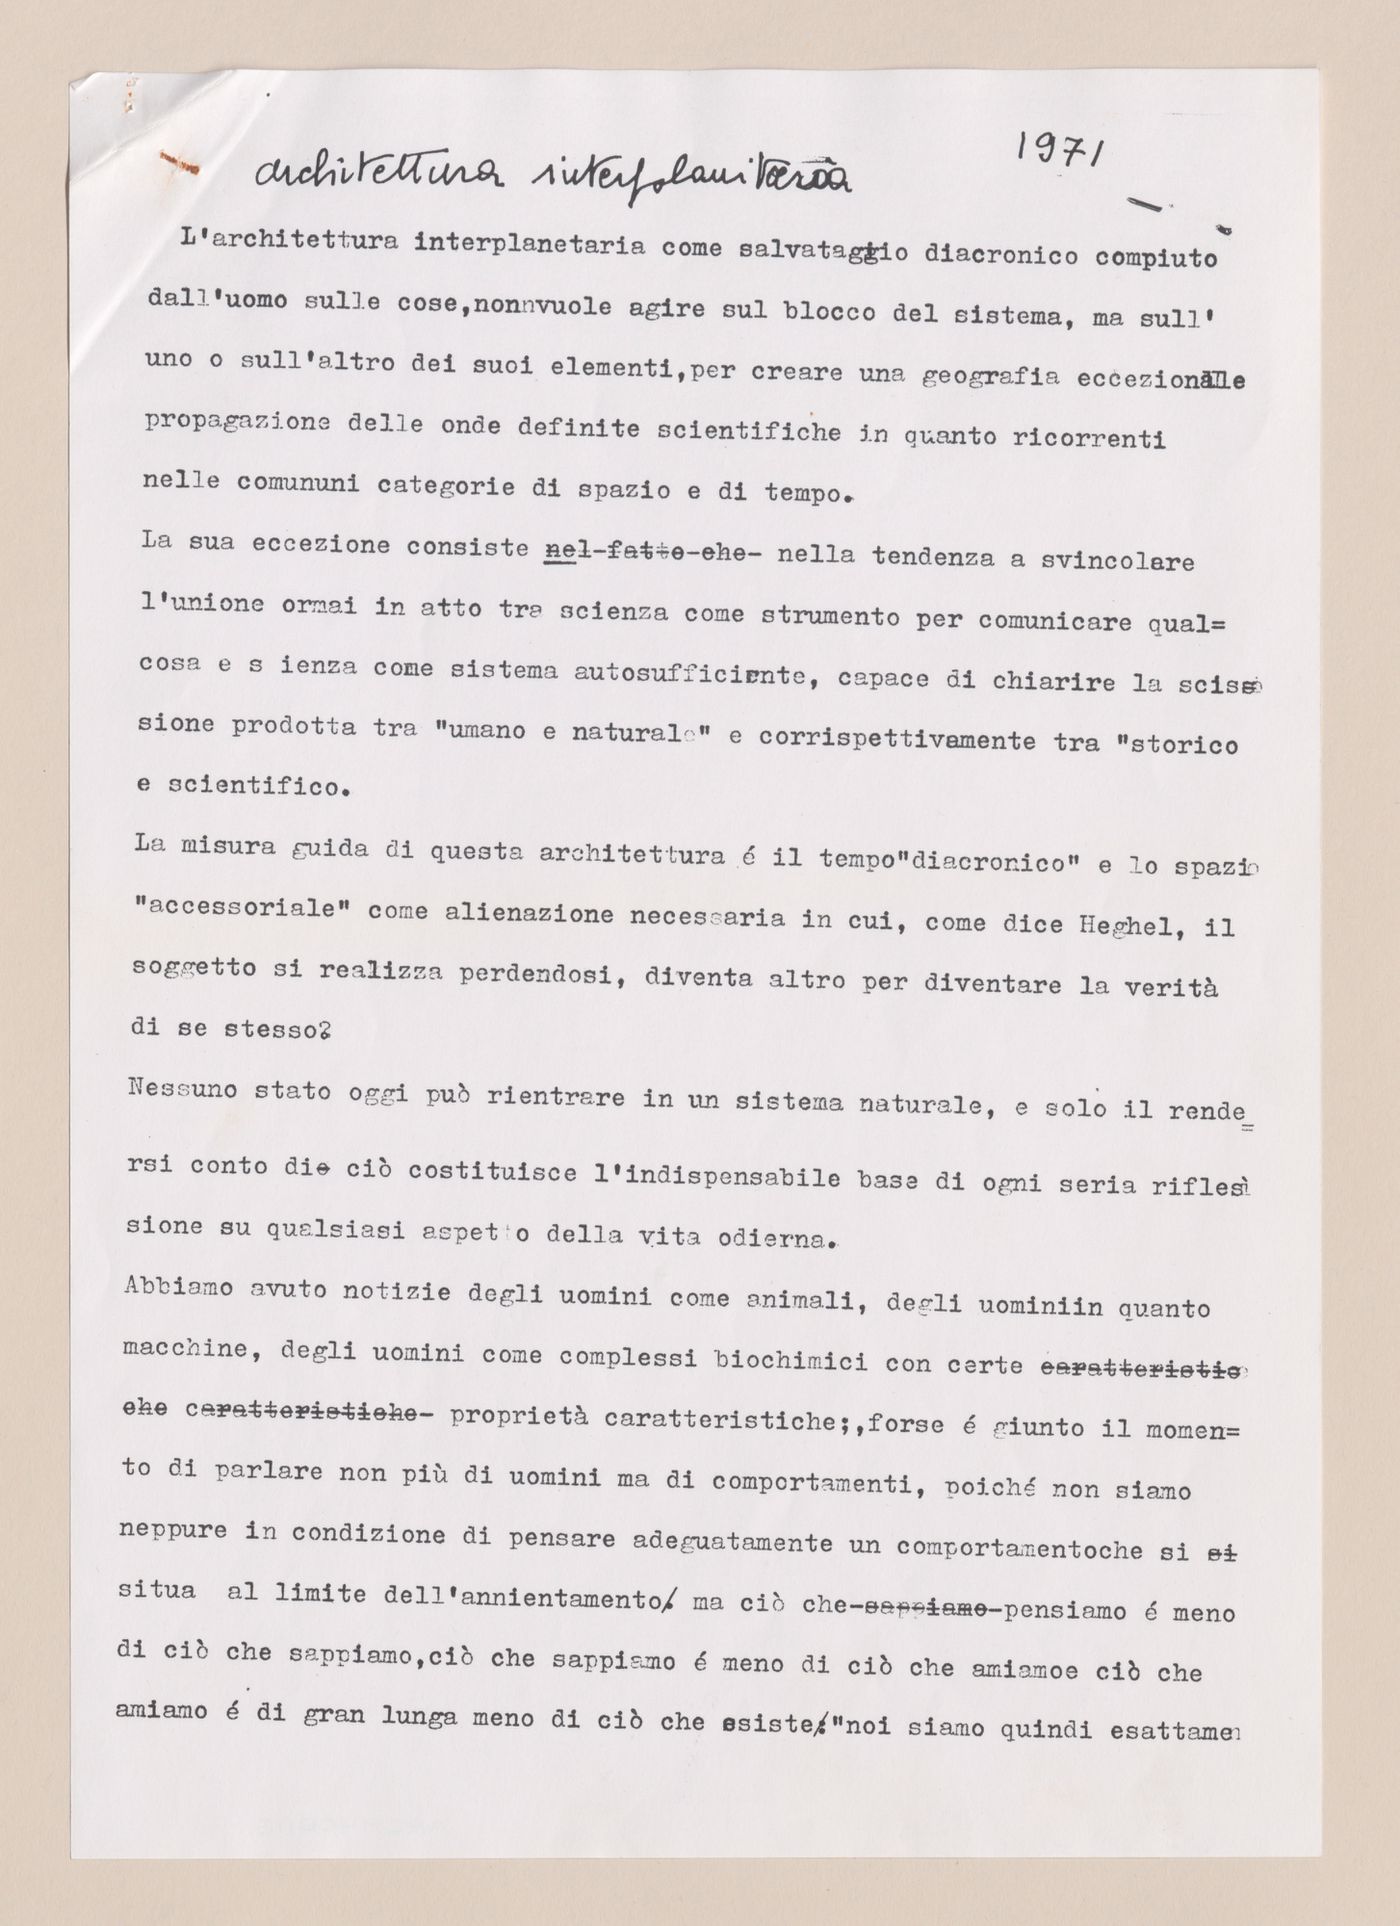 Photocopy of original script of the opening scenes for Architettura Interplanetaria [Interplanetary Architecture]